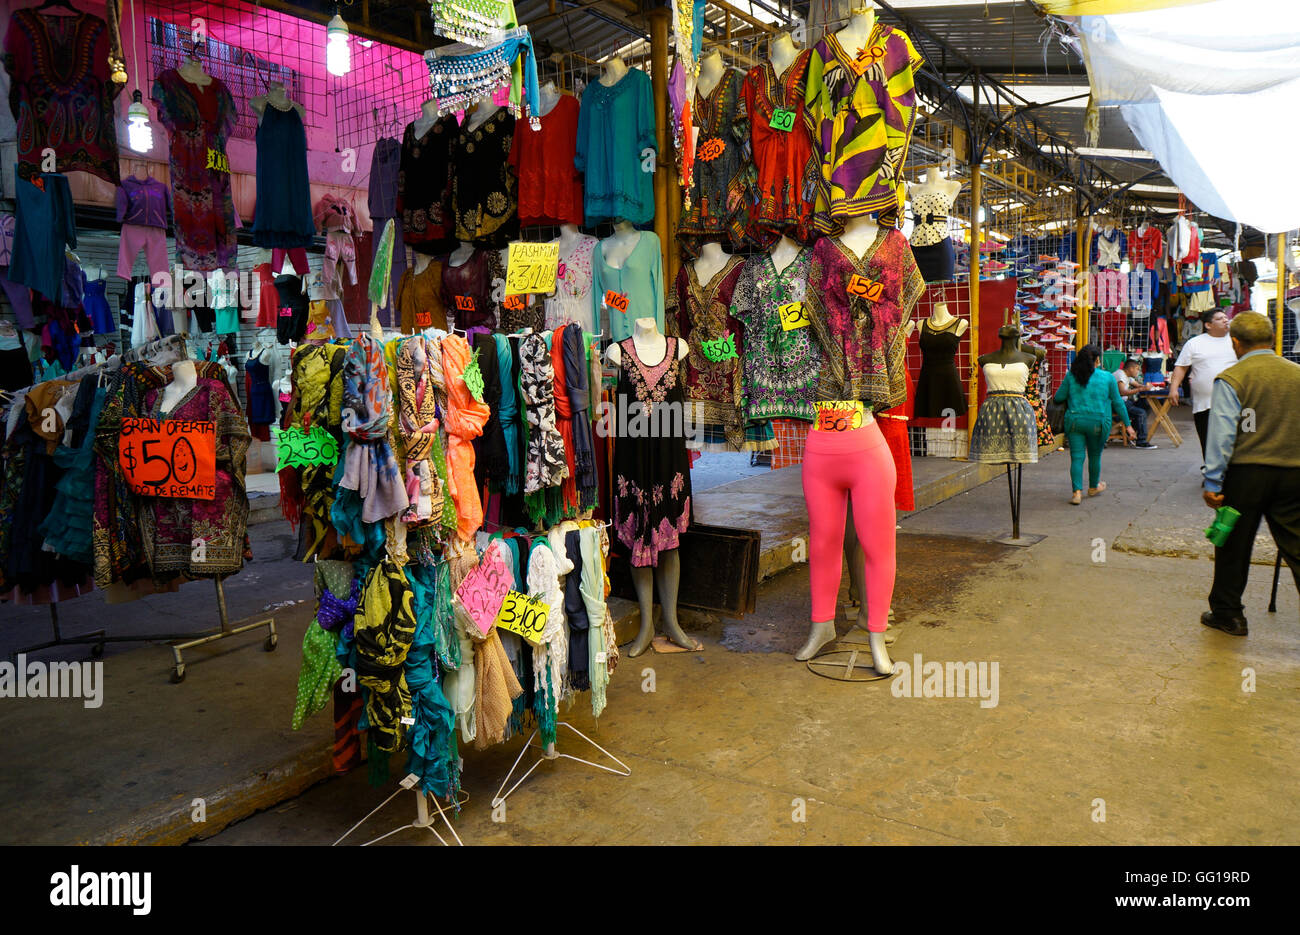 Ciudad de México México mercado Lagunilla Mercado de antigüedades de pulgas  ropa usada Fotografía de stock - Alamy